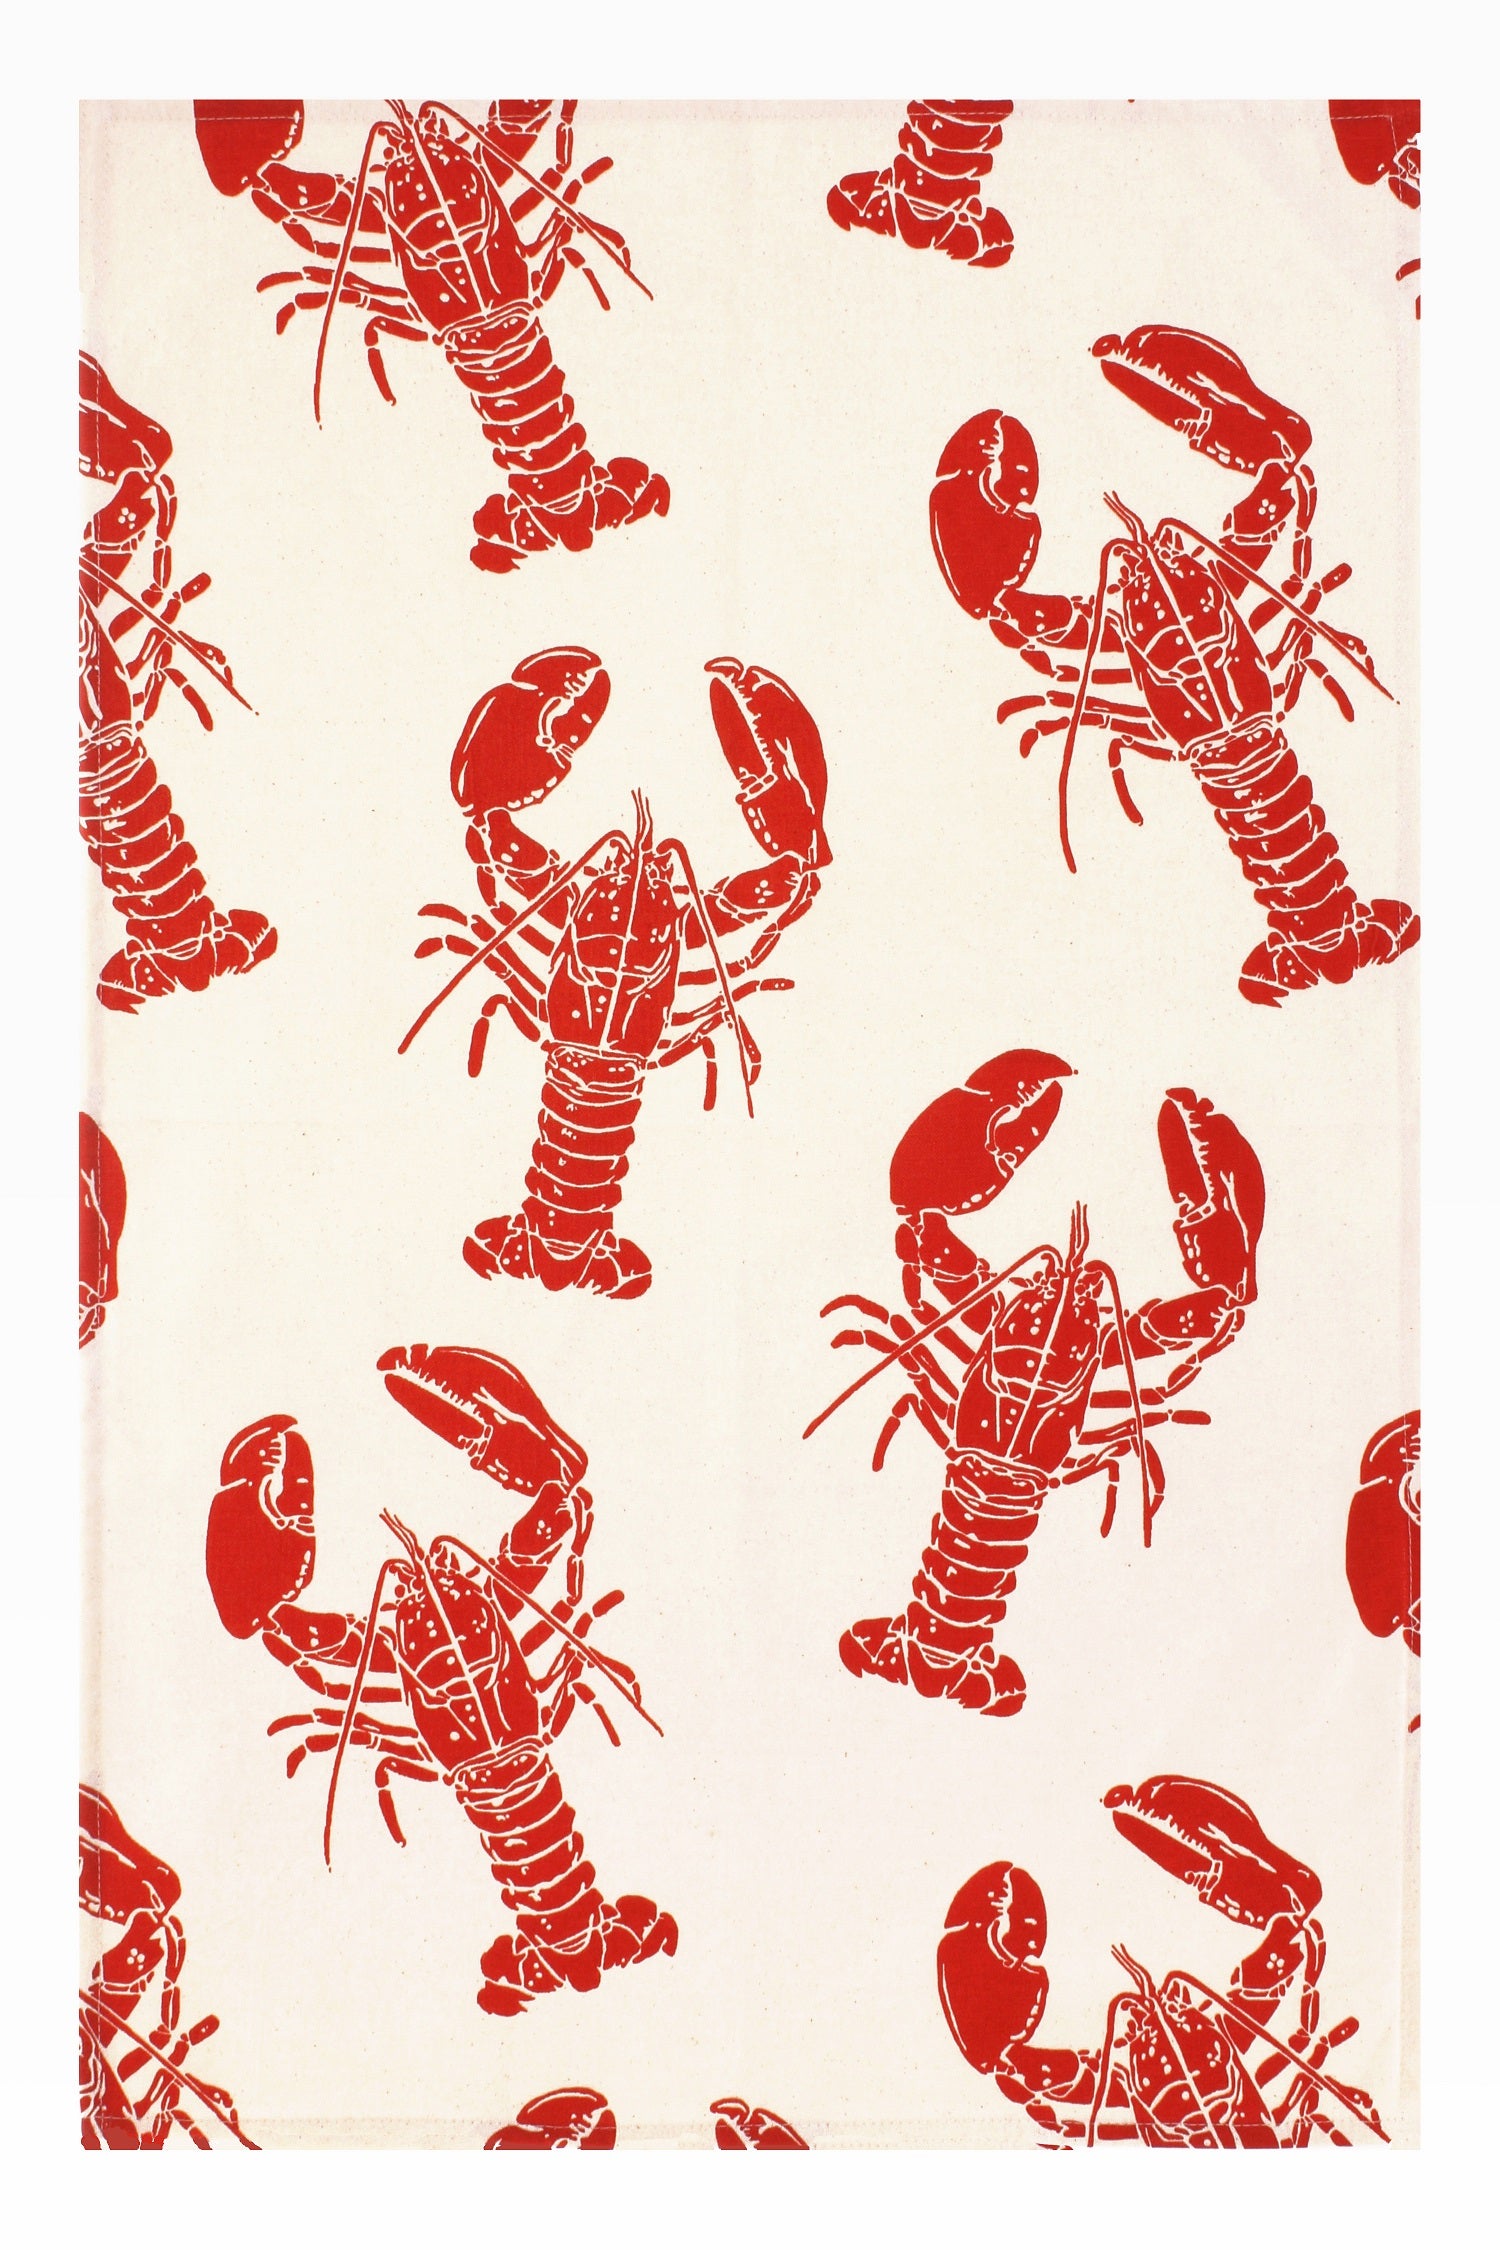 Ulster Weavers "Lobster", Pure cotton printed tea towel